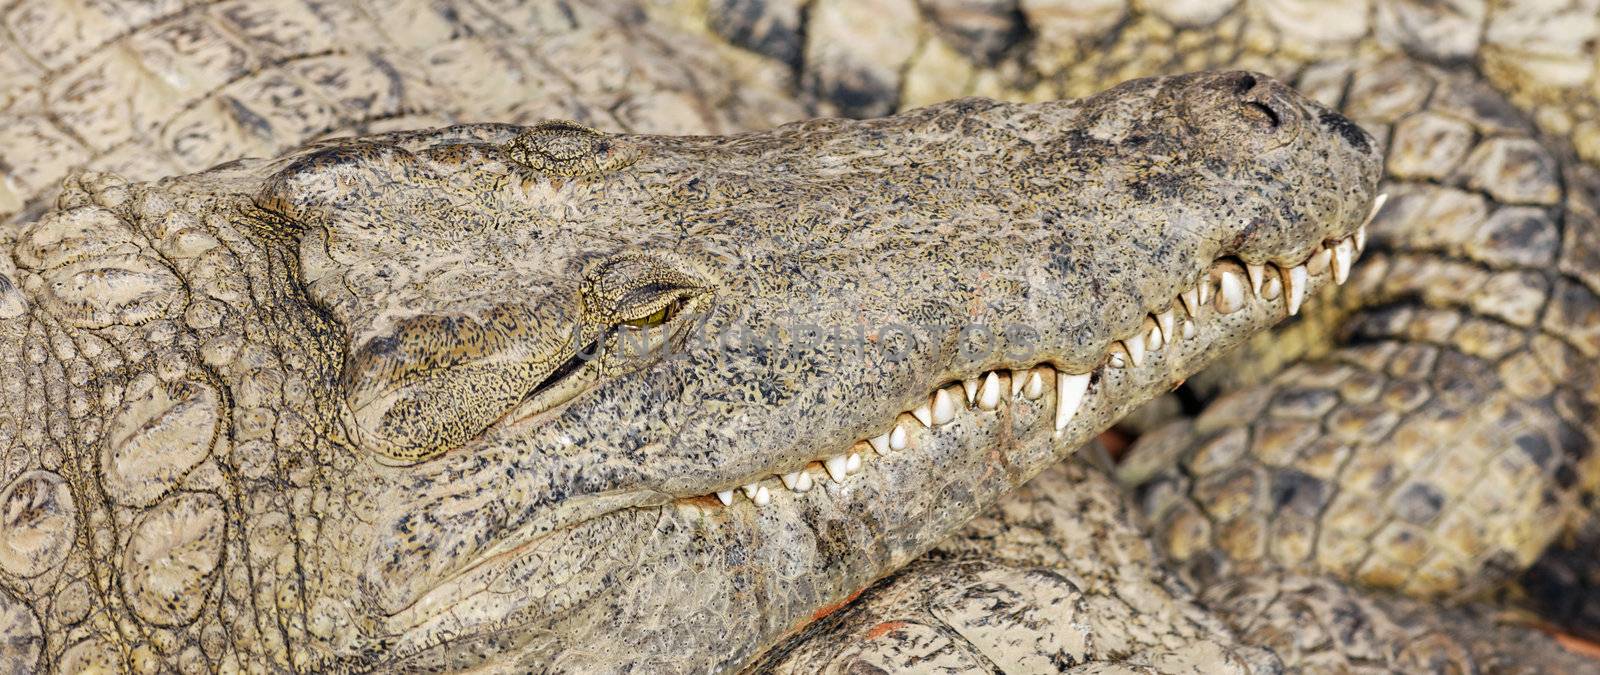 crocodiles sleeping by vwalakte